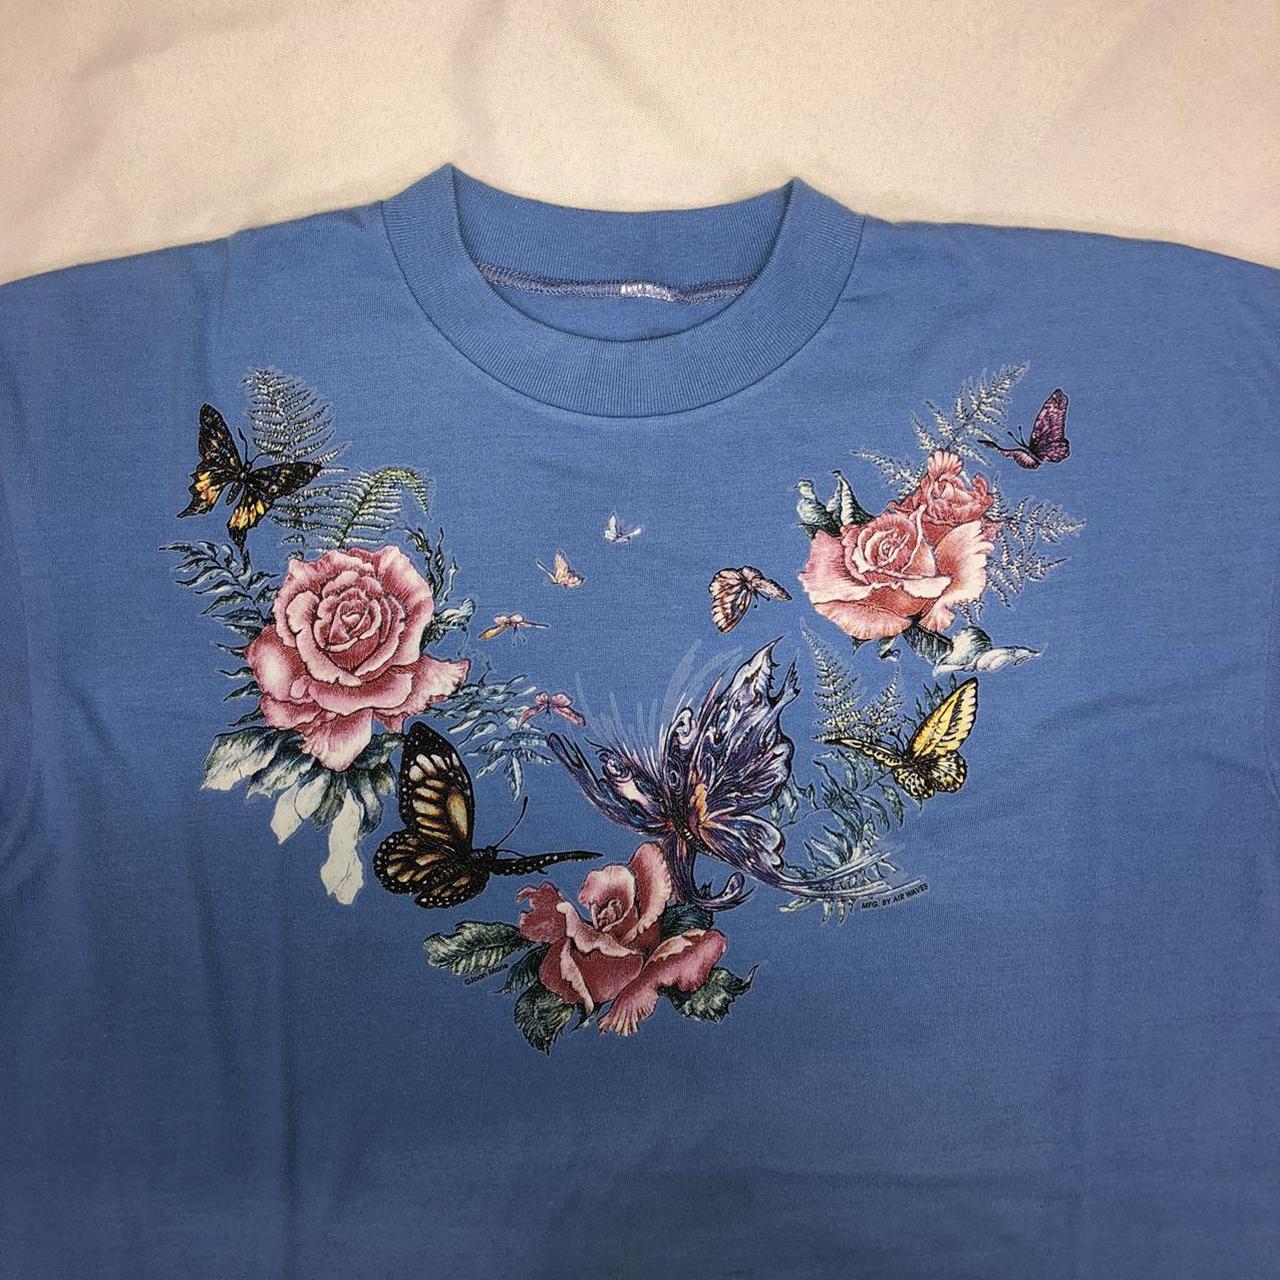 Product Image 3 - Vintage single stitch t-shirt

Fits a